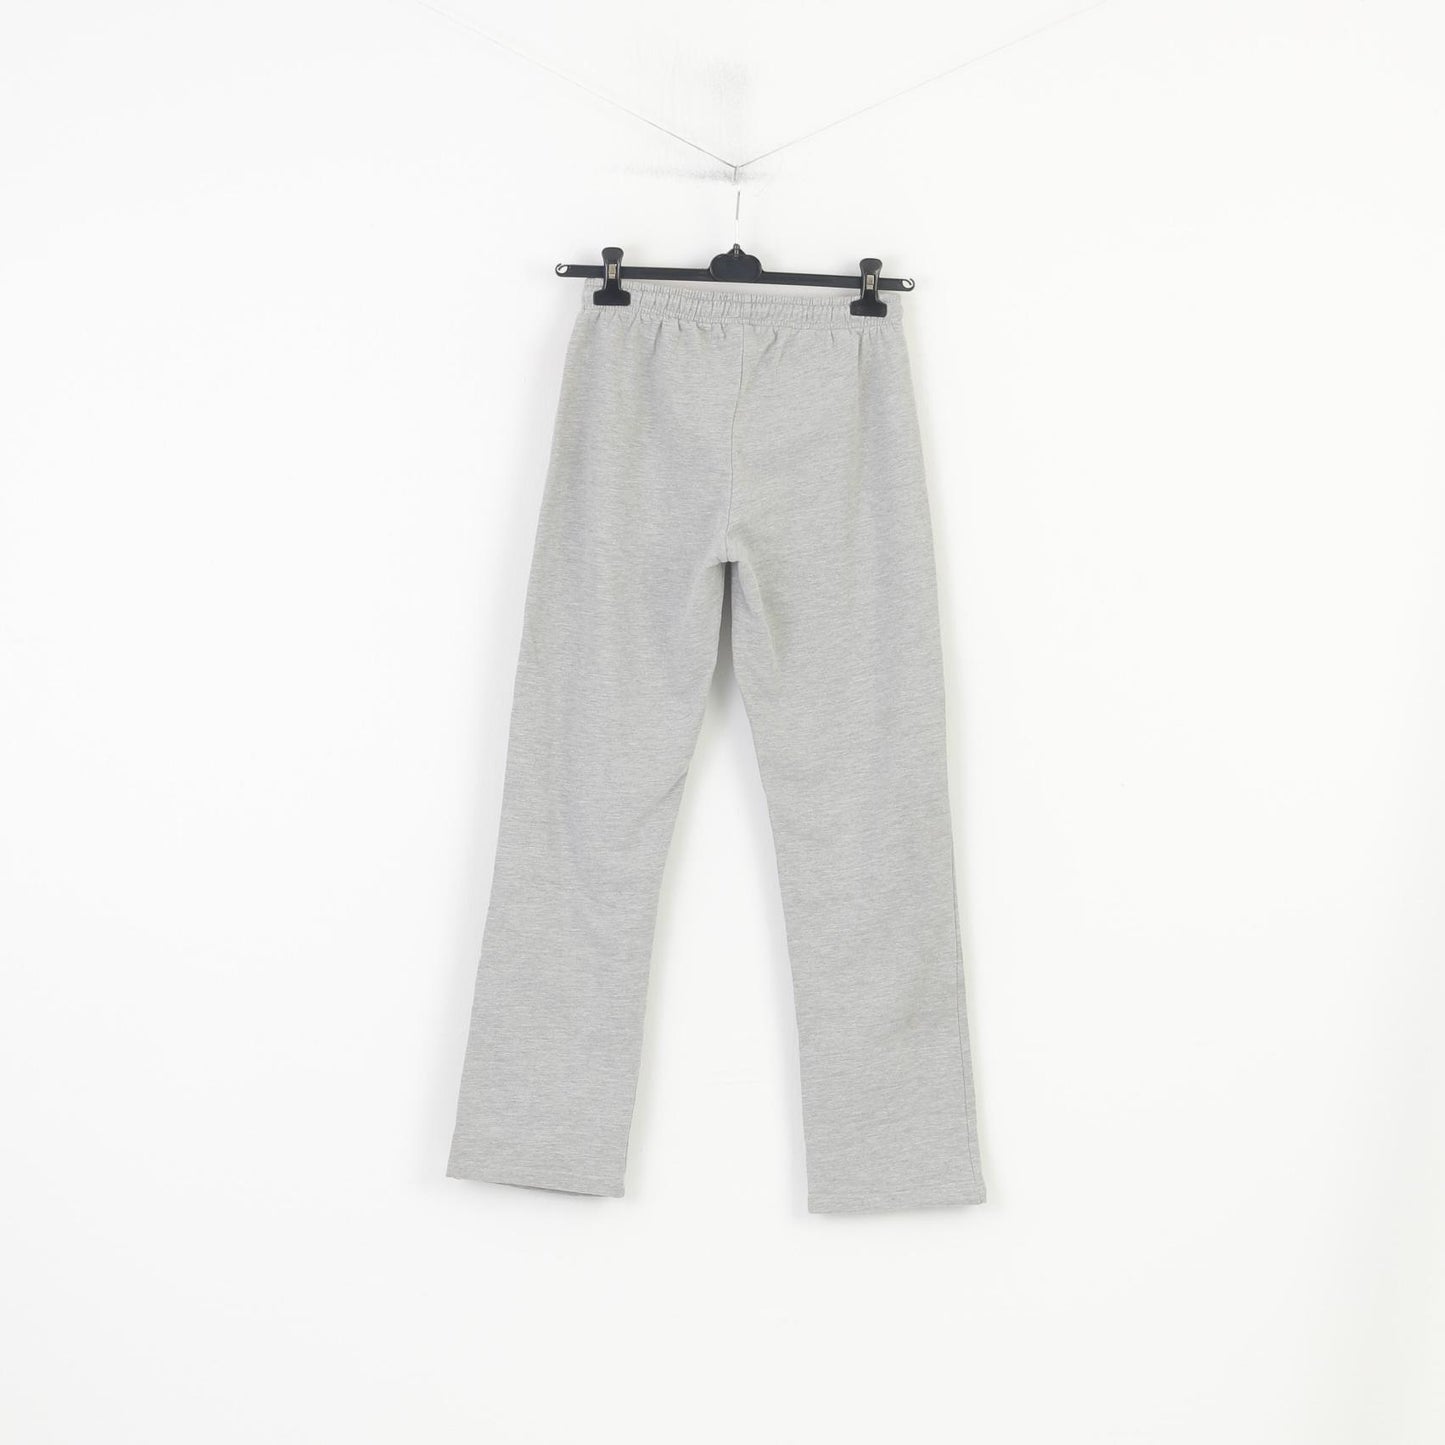 Kappa Women M Sweatpants Gray Cotton Activewear Training Pants